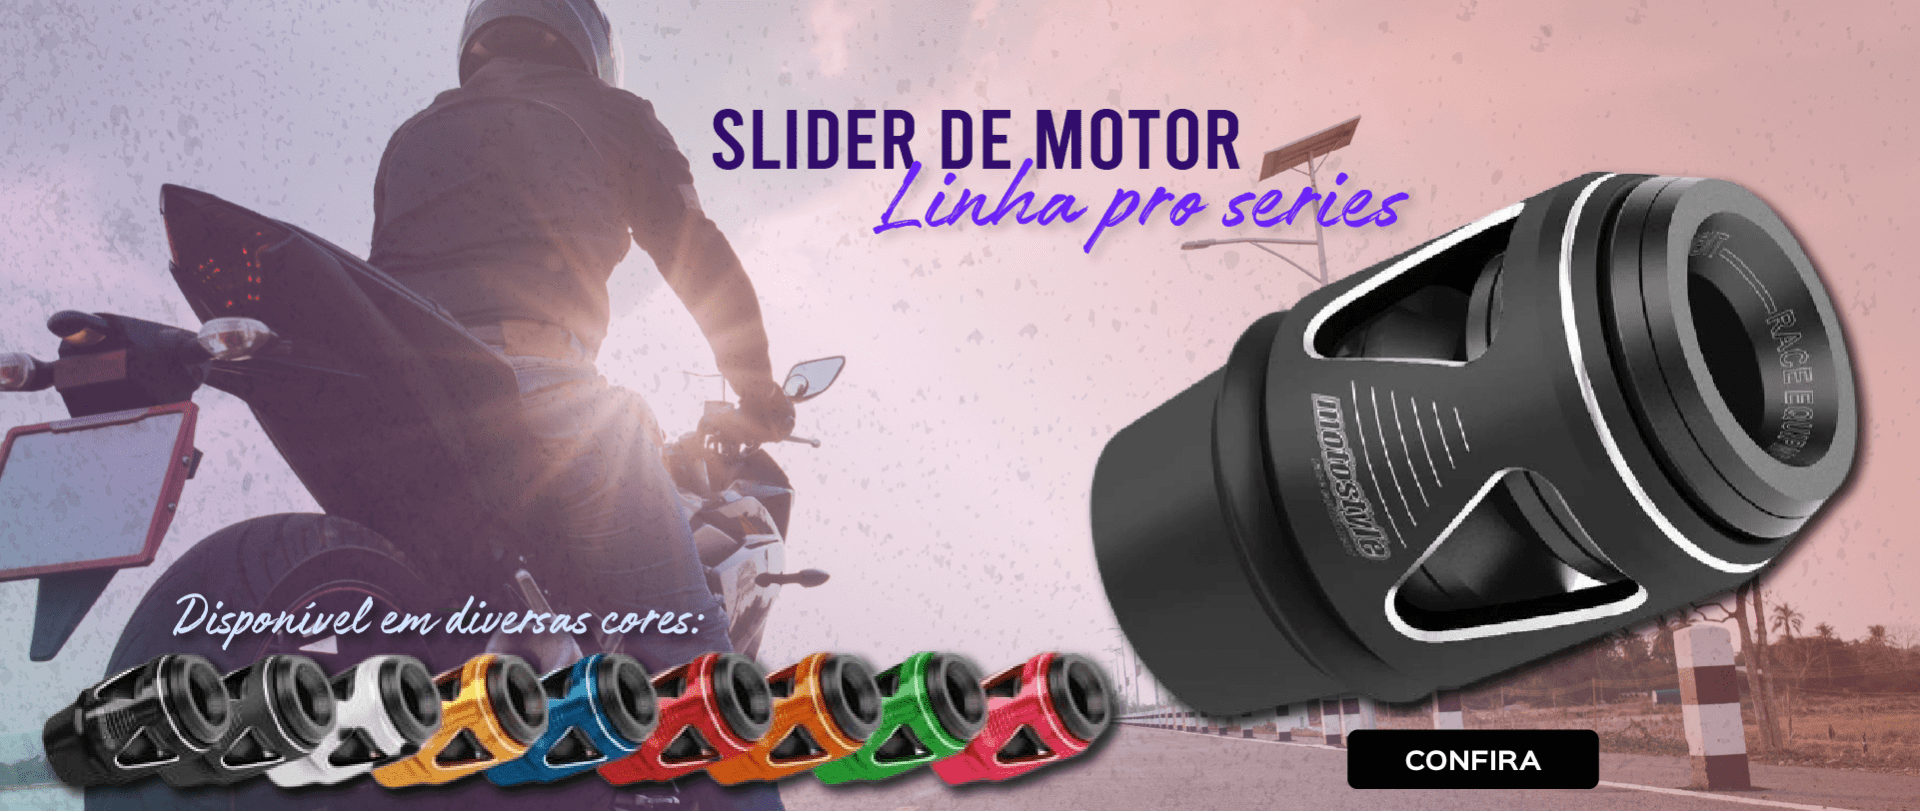 Slider Motostyle